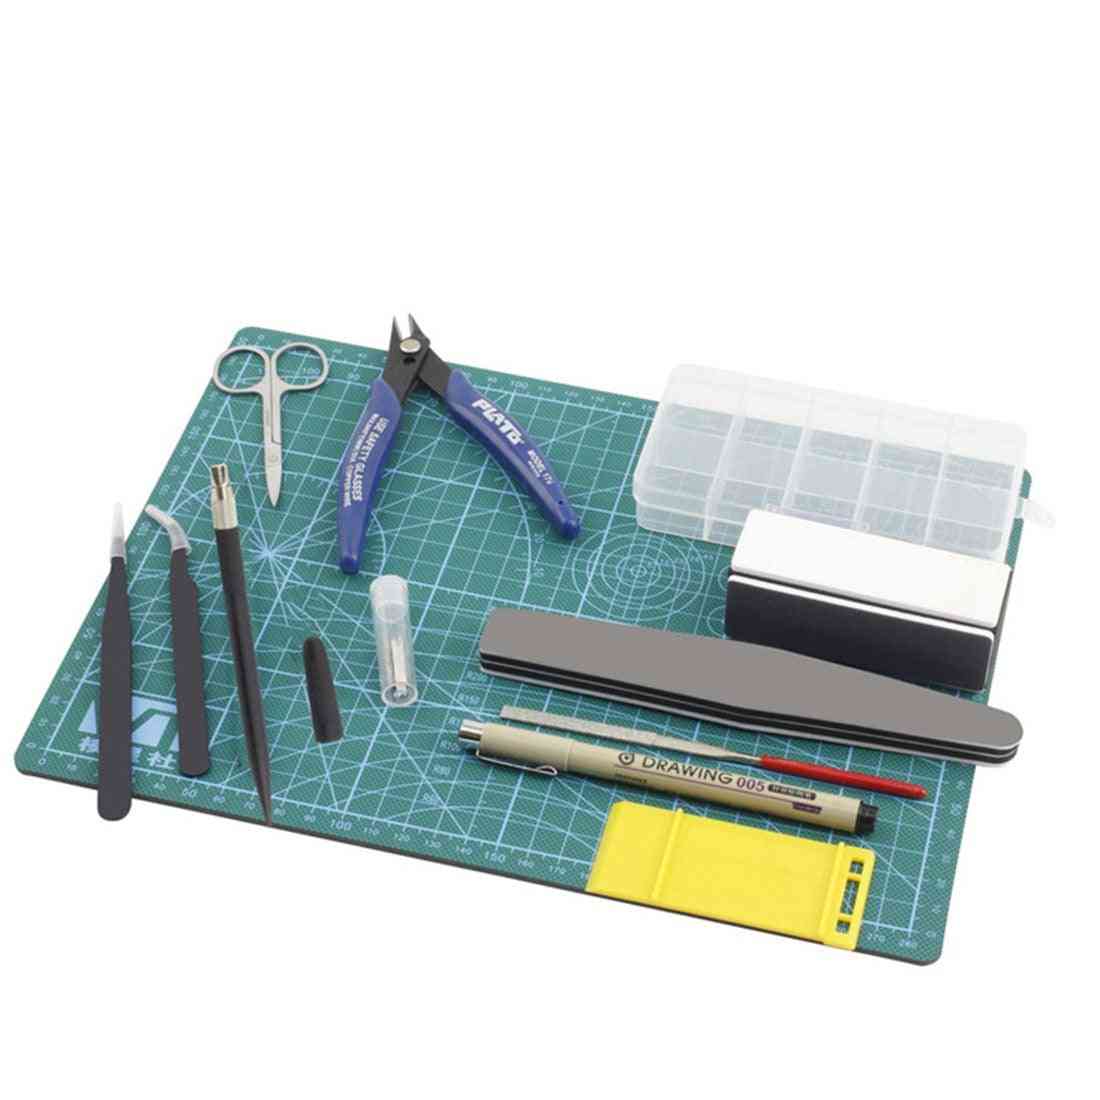 Model/craft Building Kit Including Engraving Pen, Tweezers, Polishing Stick And Cutting Mat